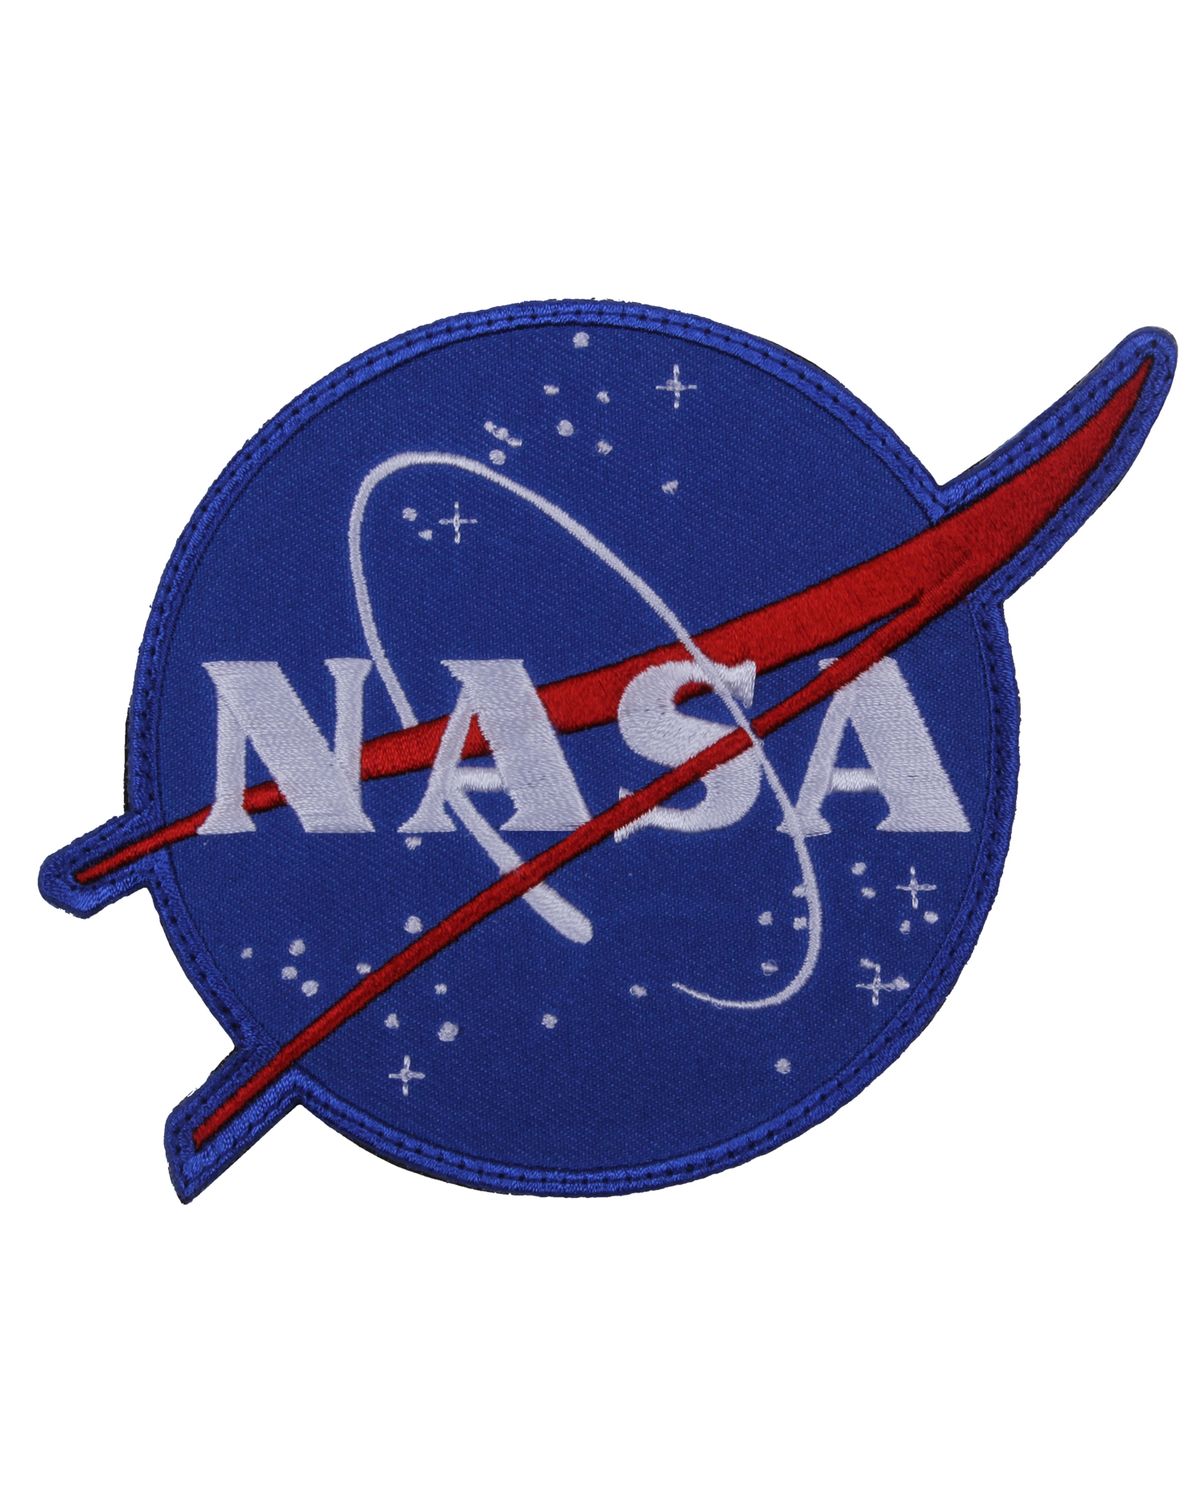 'Rothco 1885 NASA Meatball Logo Morale Patch'